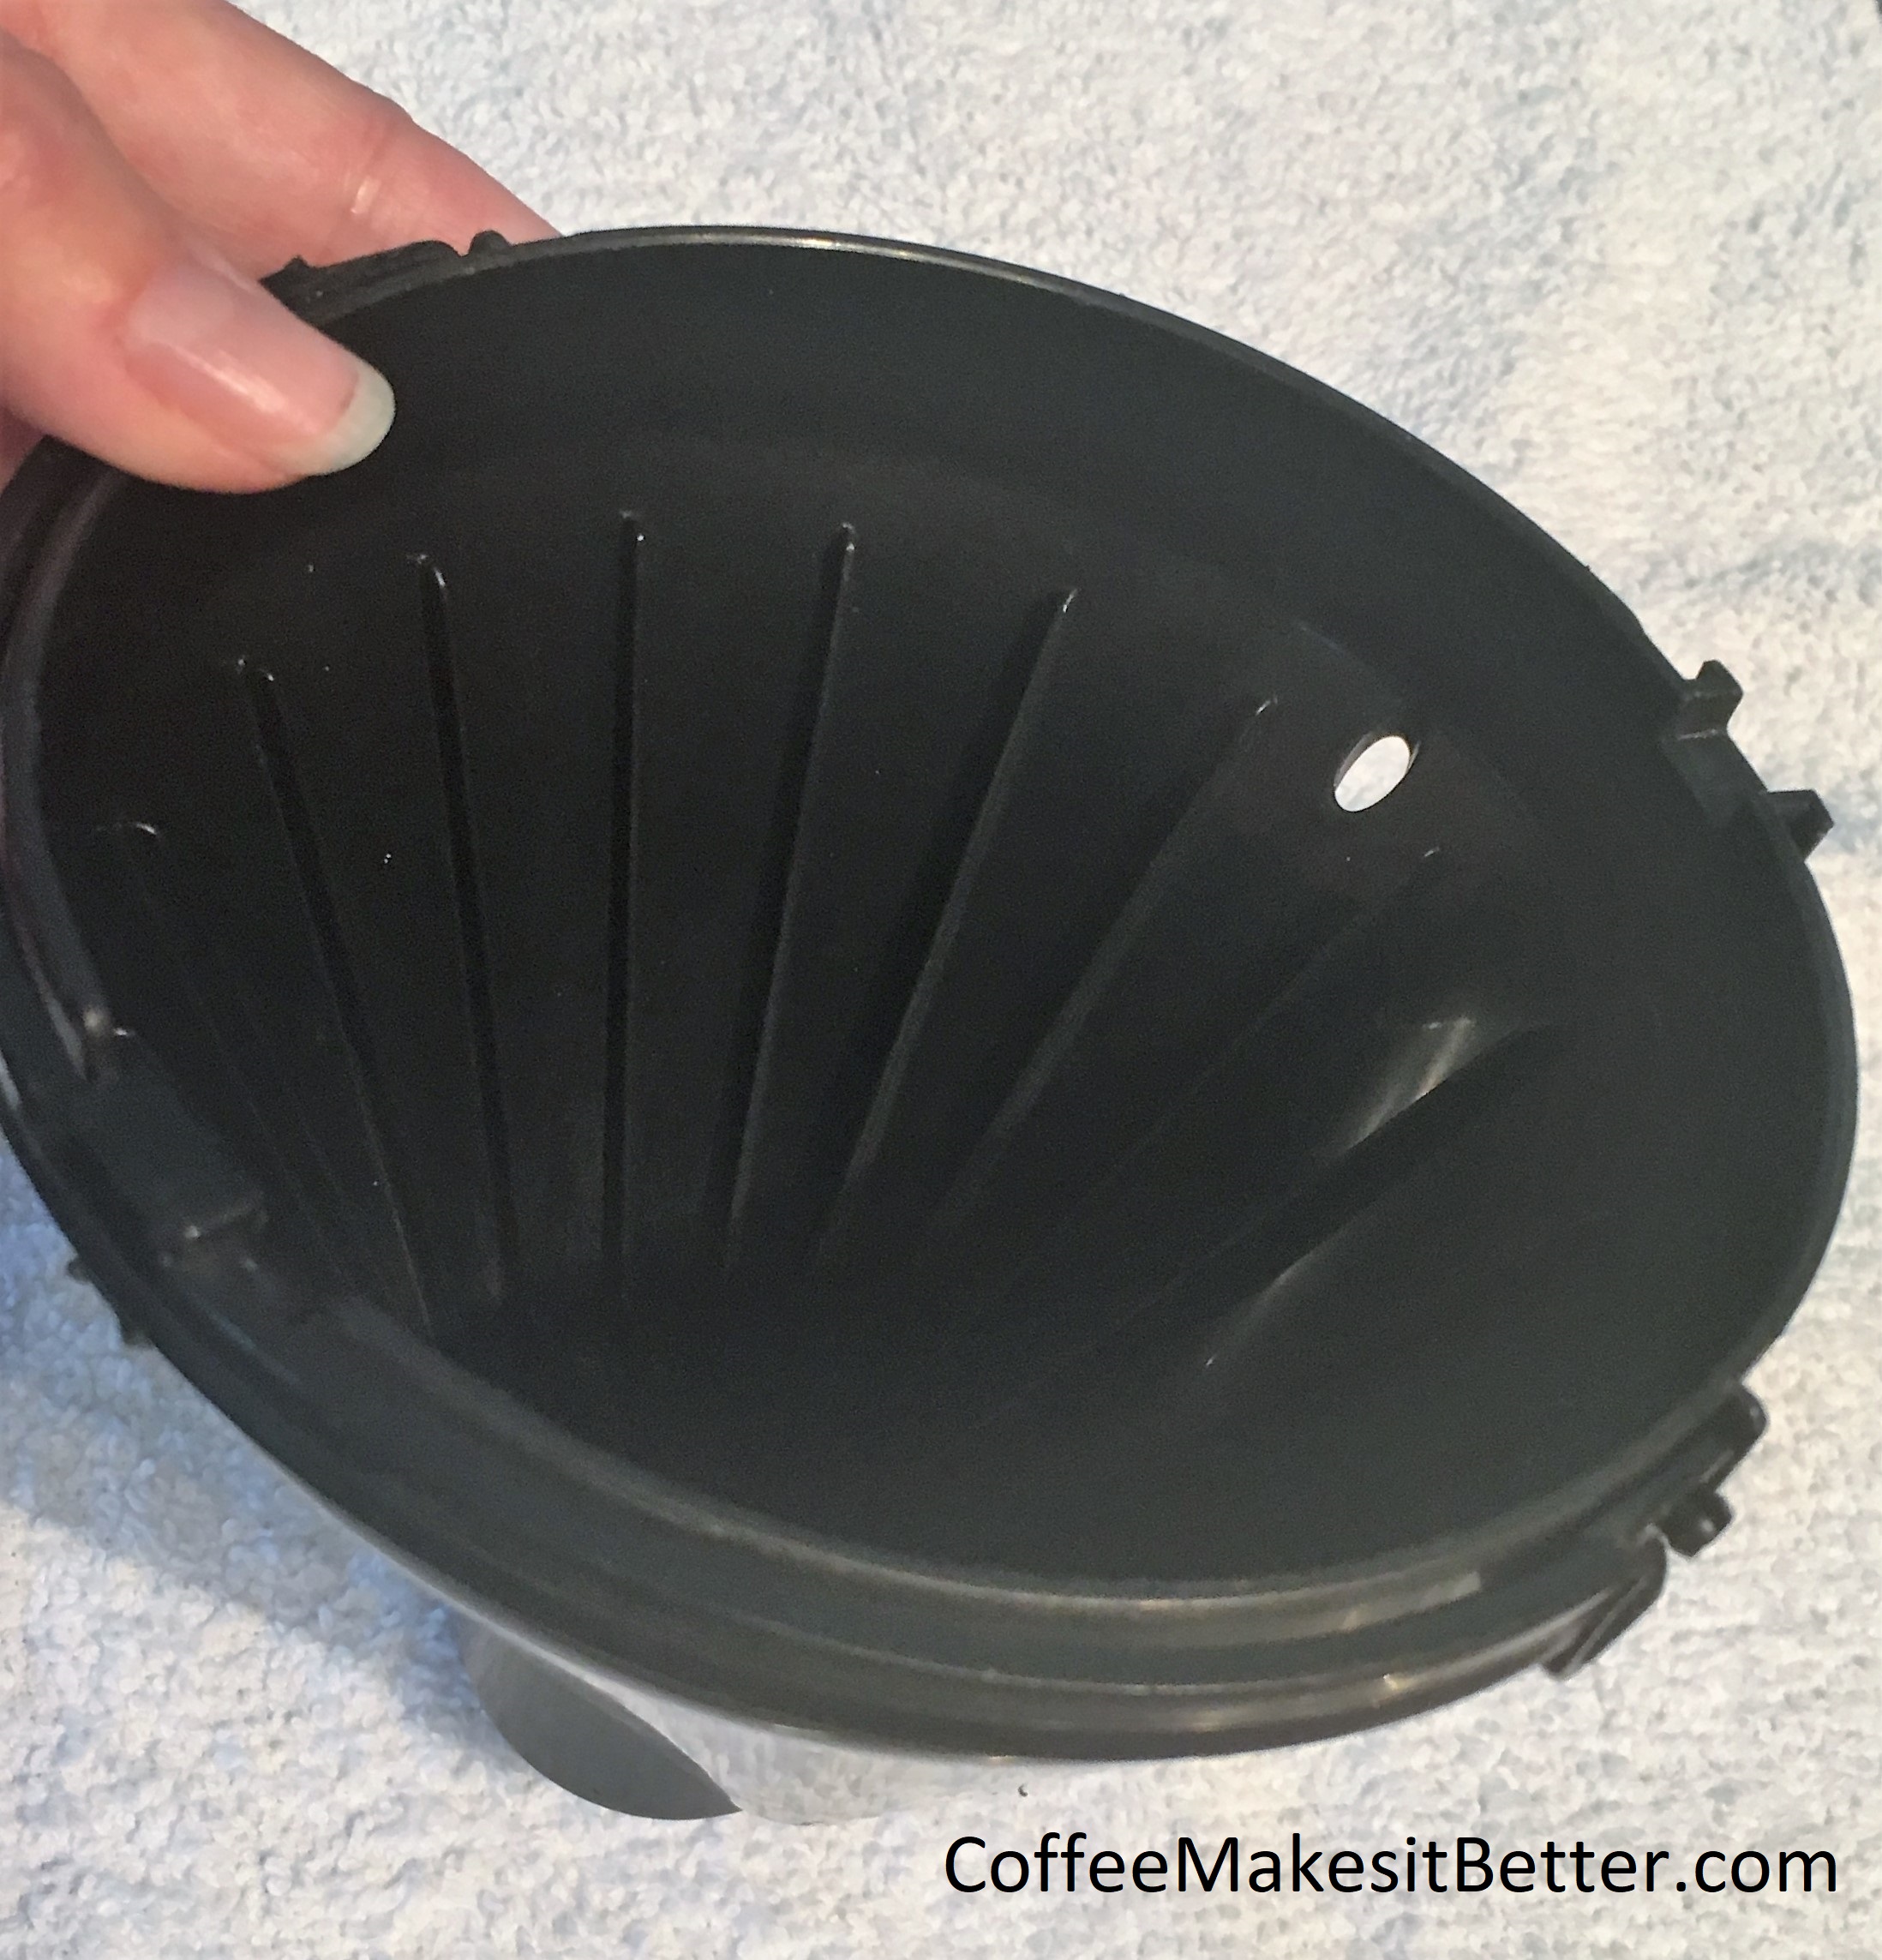 Melitta drip coffee maker cone filter basket from CoffeeMakesitBetter.com